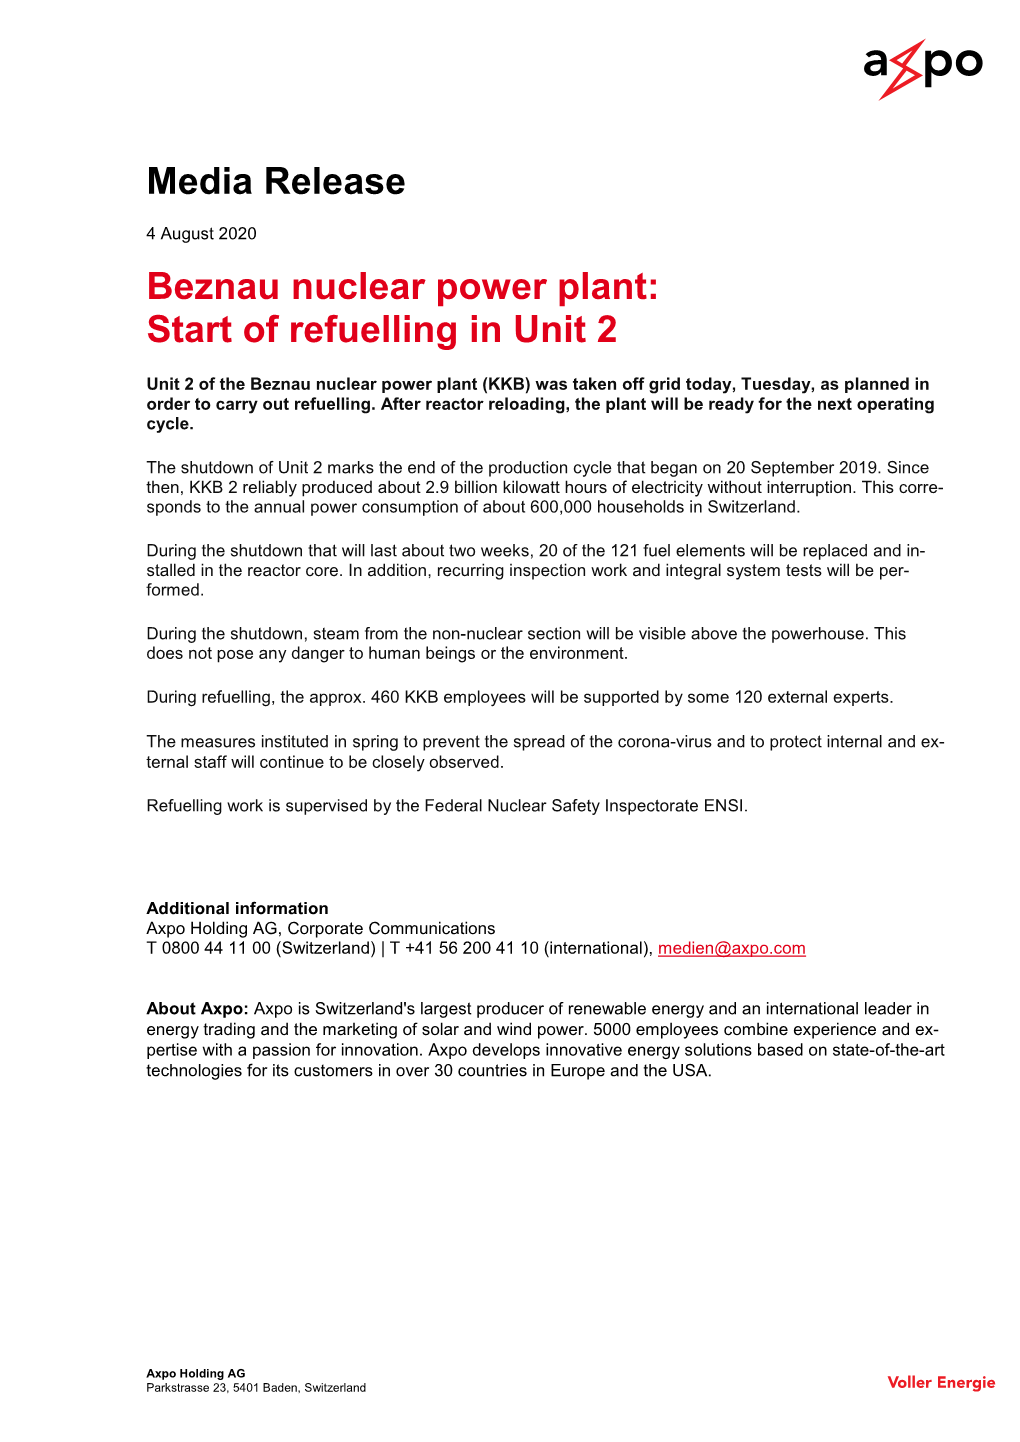 Media Release Beznau Nuclear Power Plant